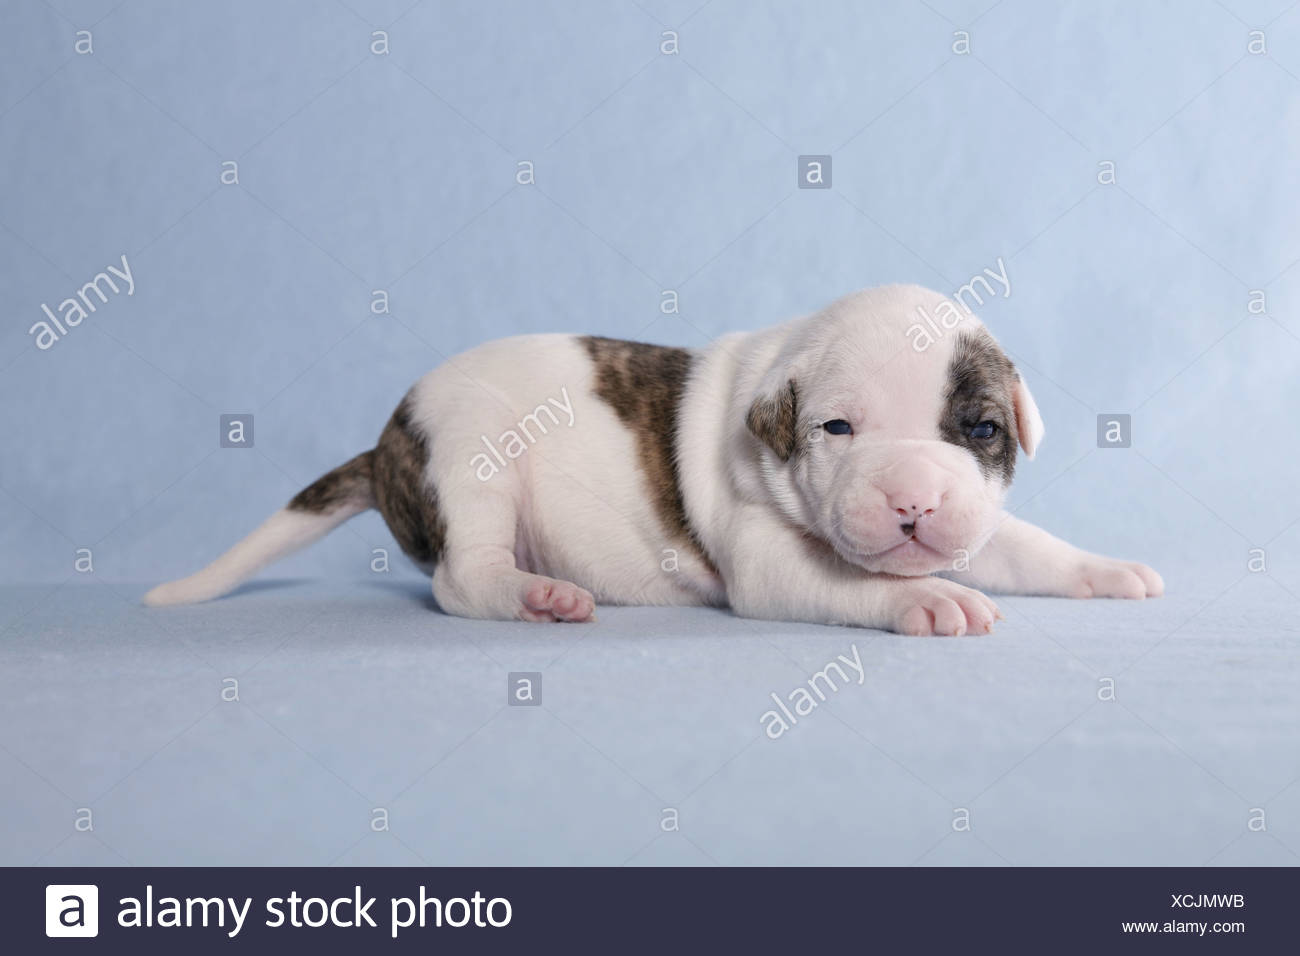 baby american bulldog